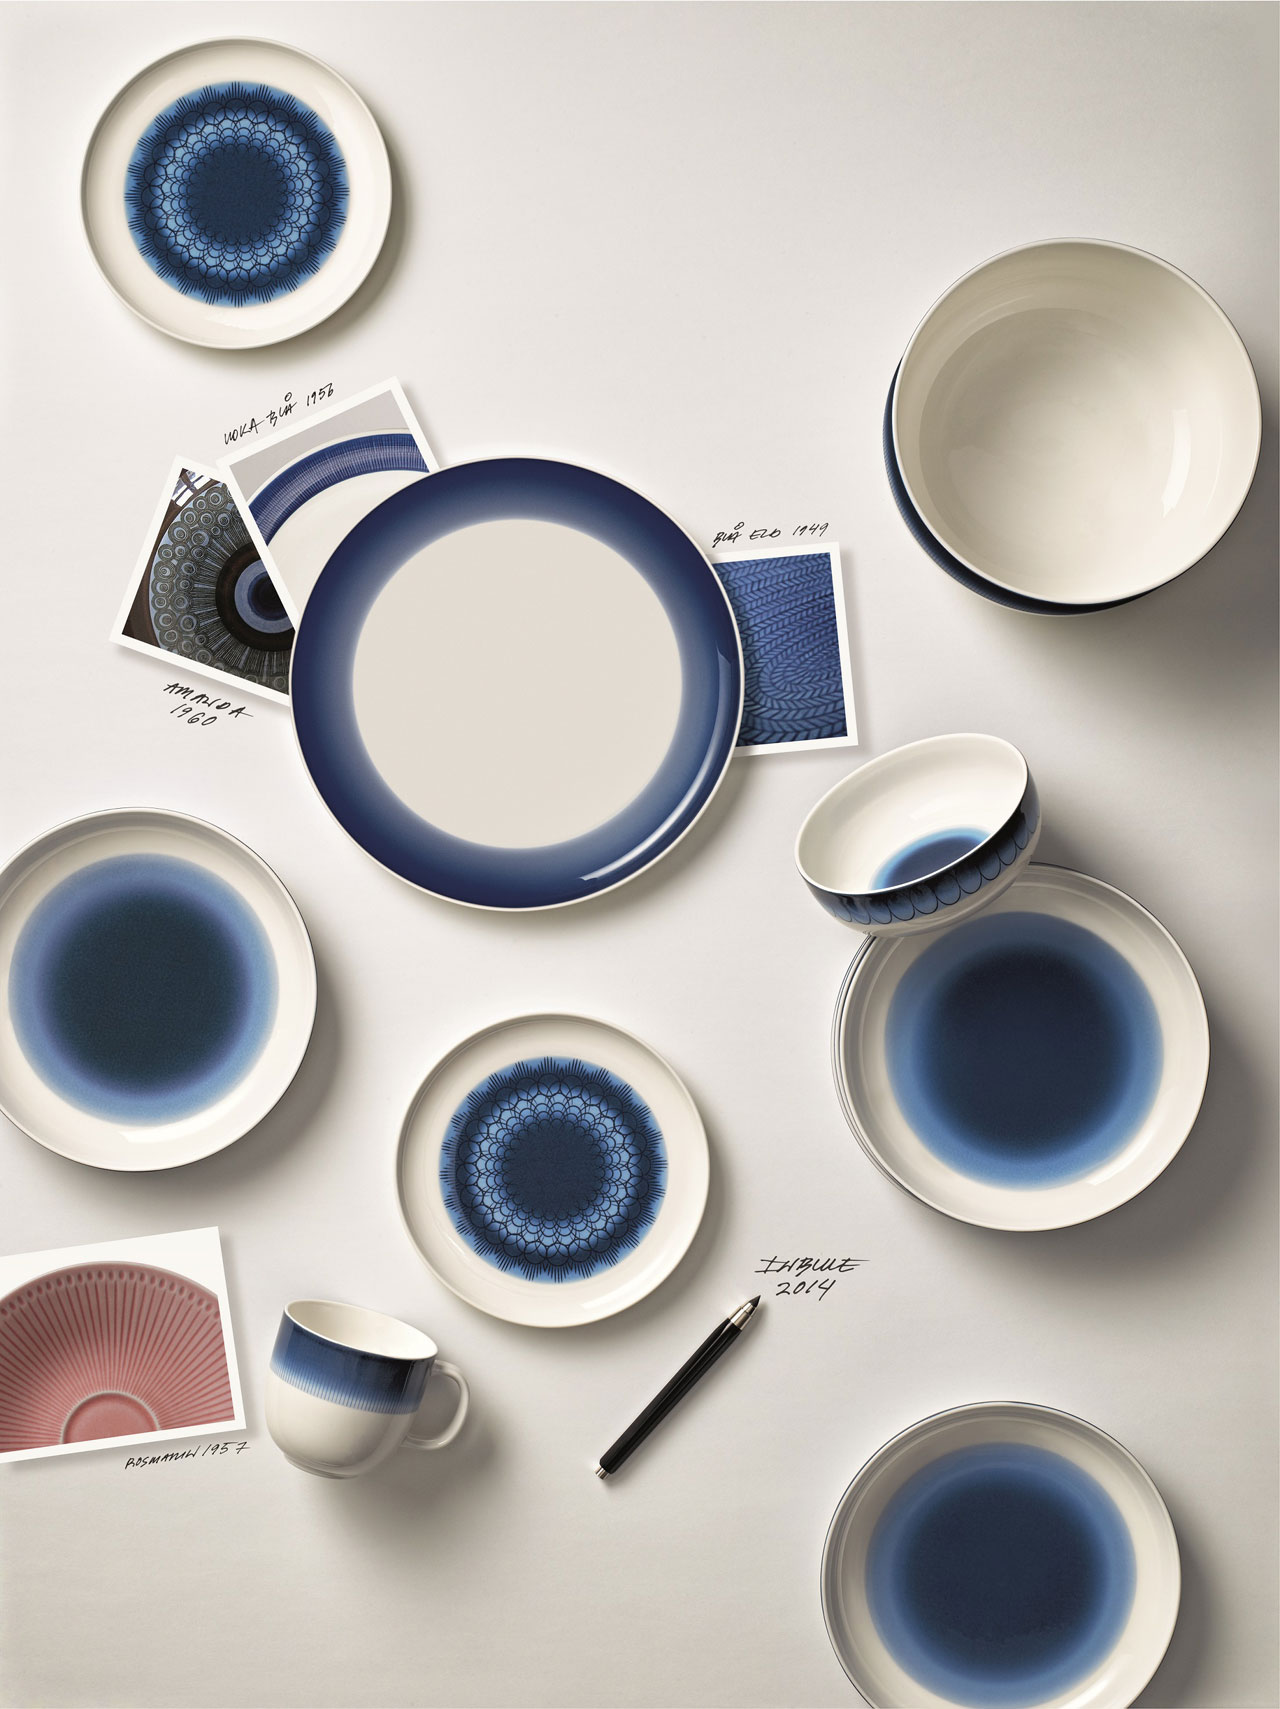 Inblue porcelain tableware by Monica Förster for Rörstrand.